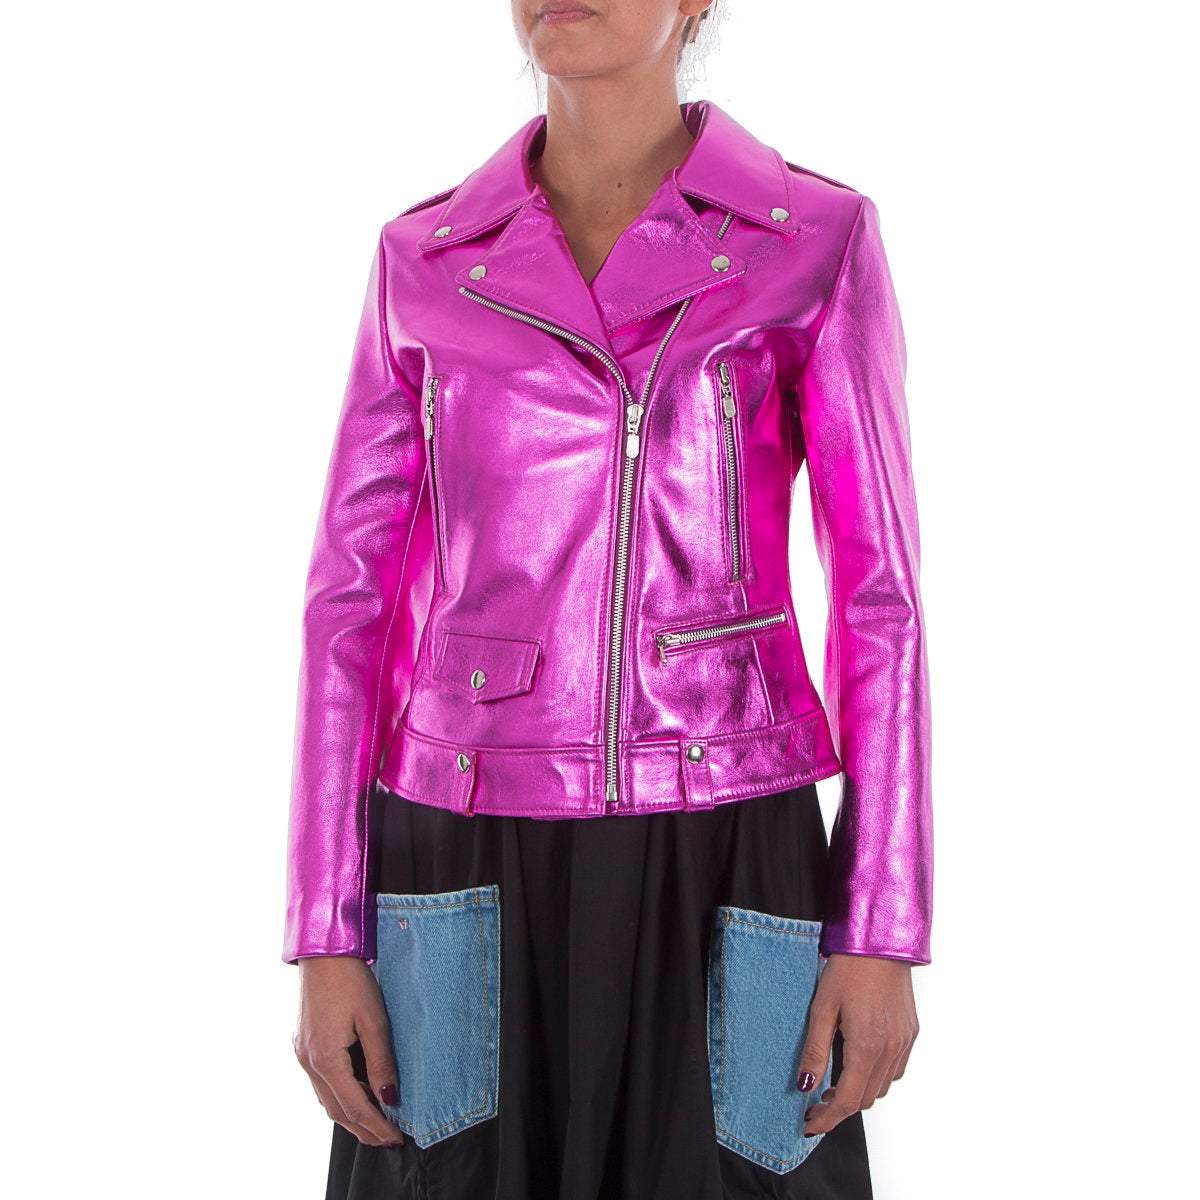 Ferrari Pink Leather Jacket  Barbie Pink Ferrari Leather Jacket